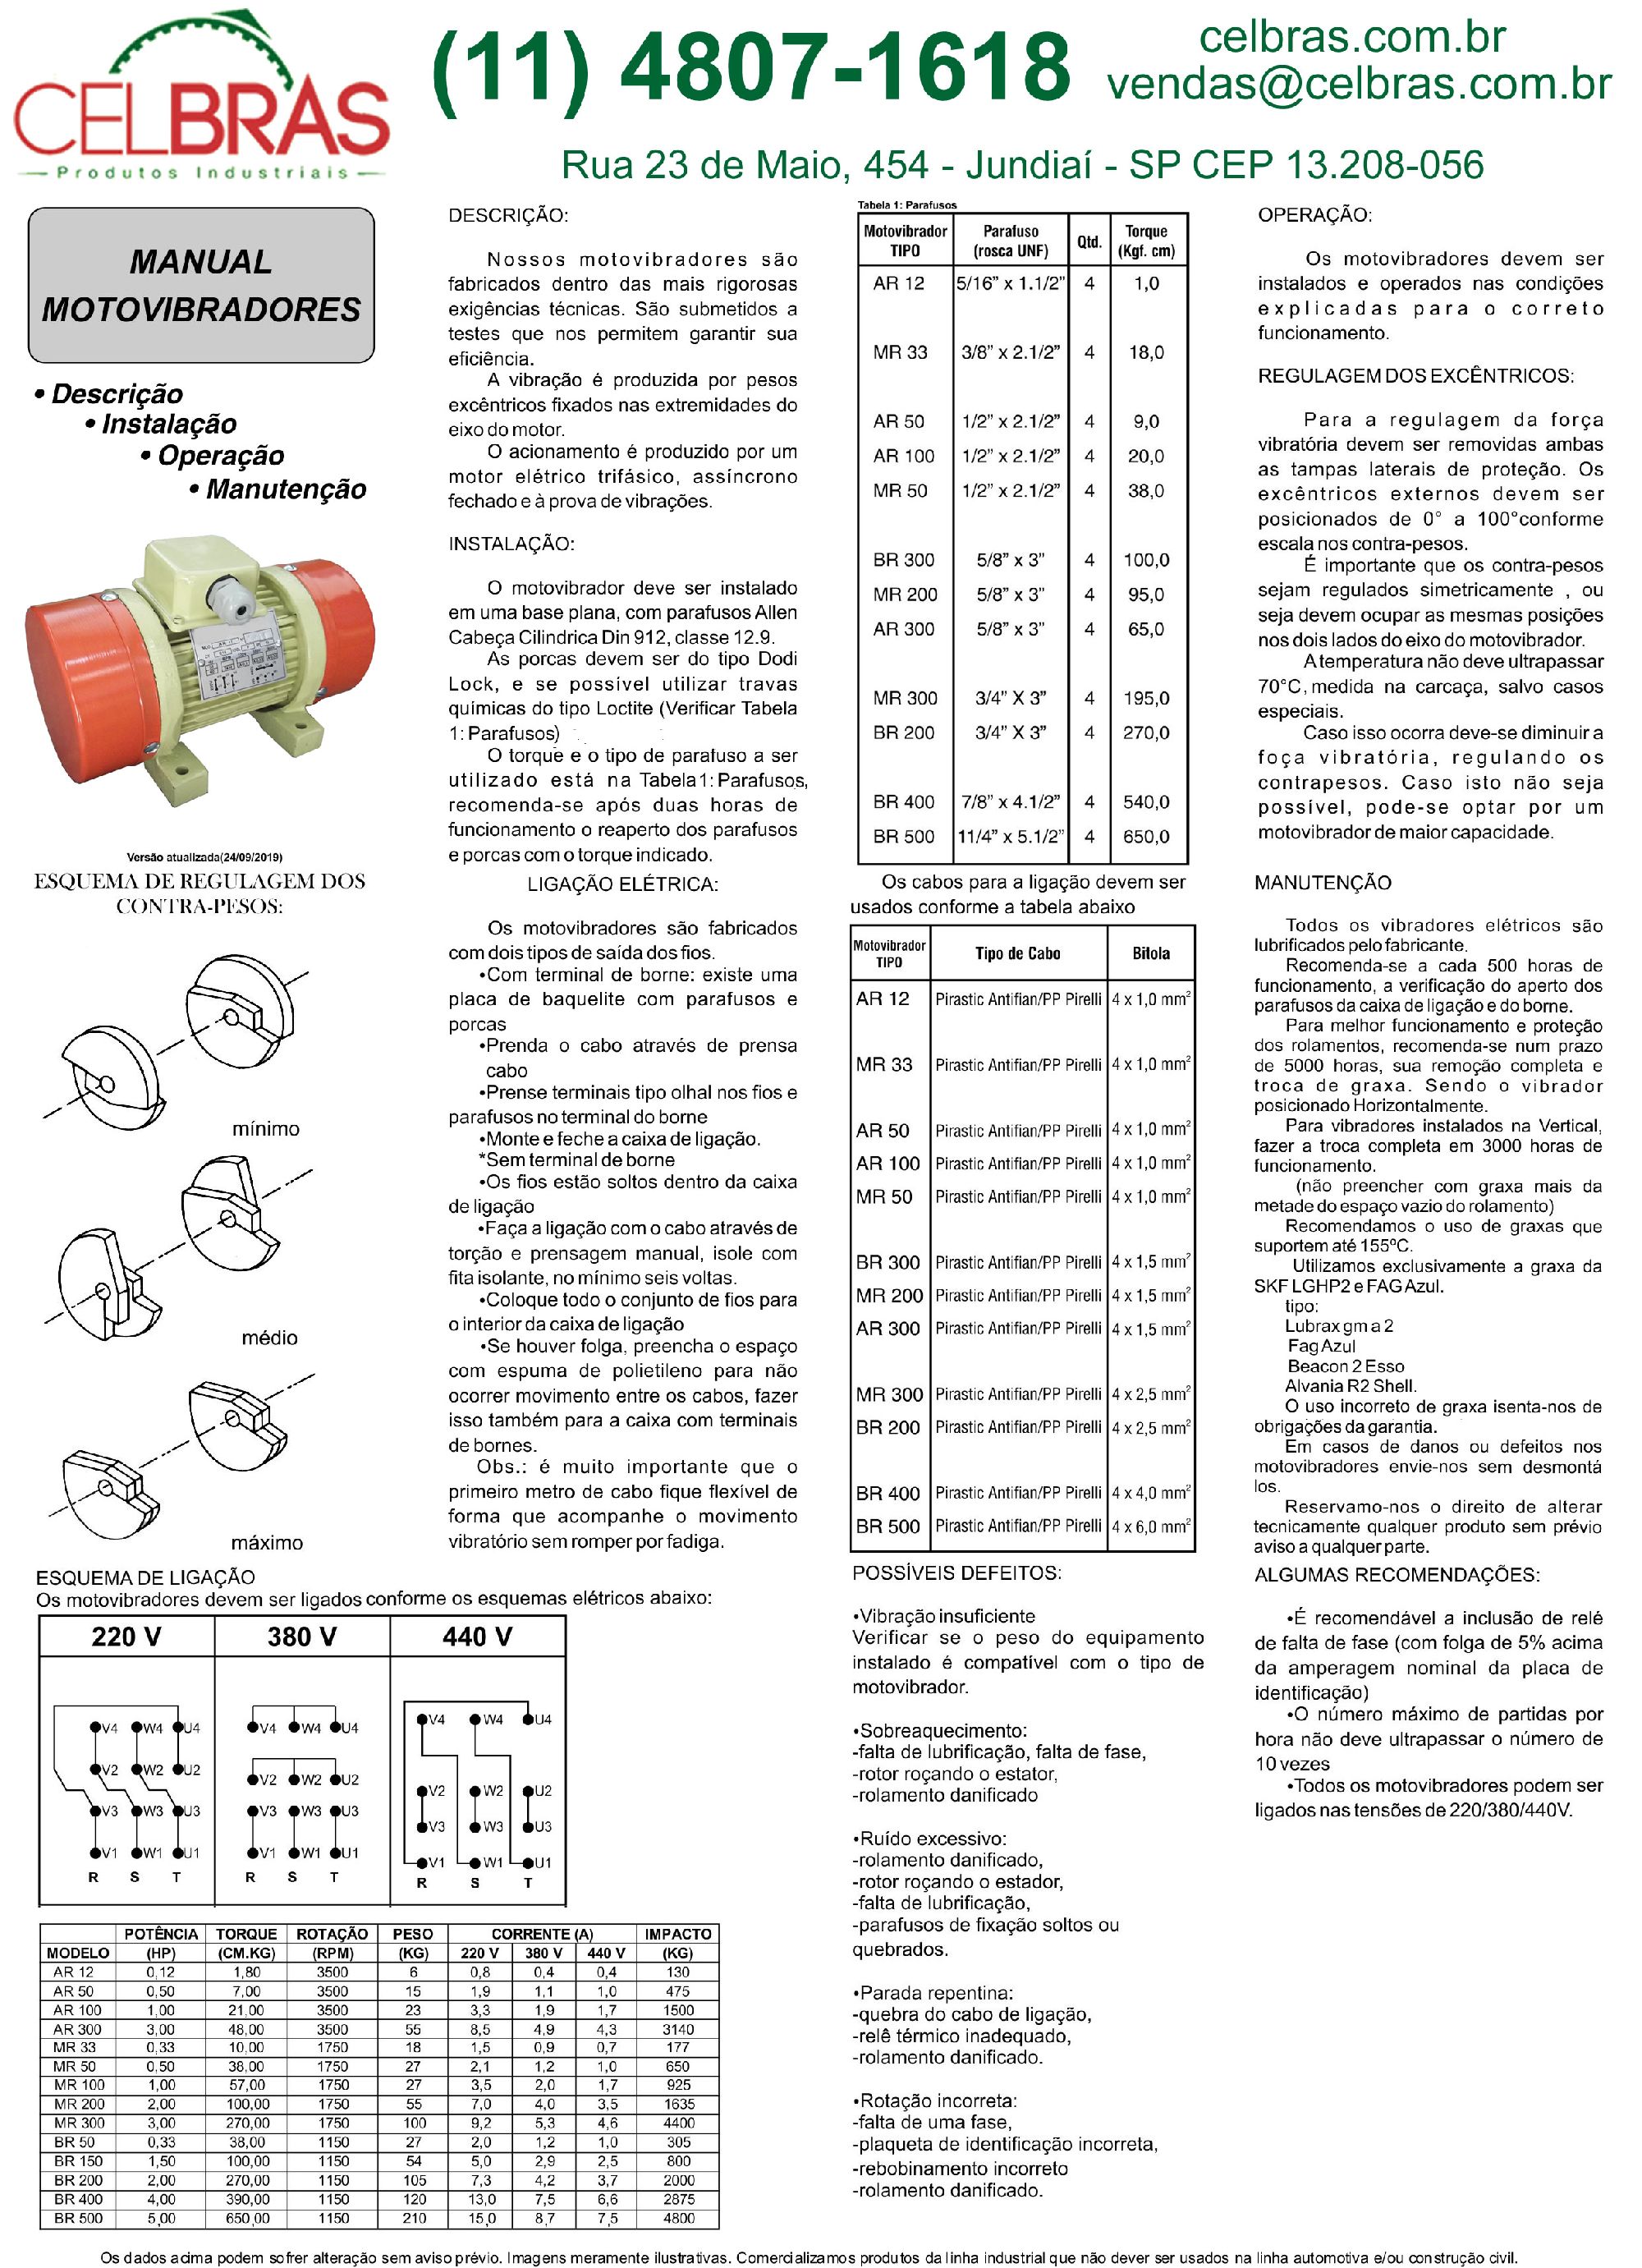 Manual Motovibrador IP55